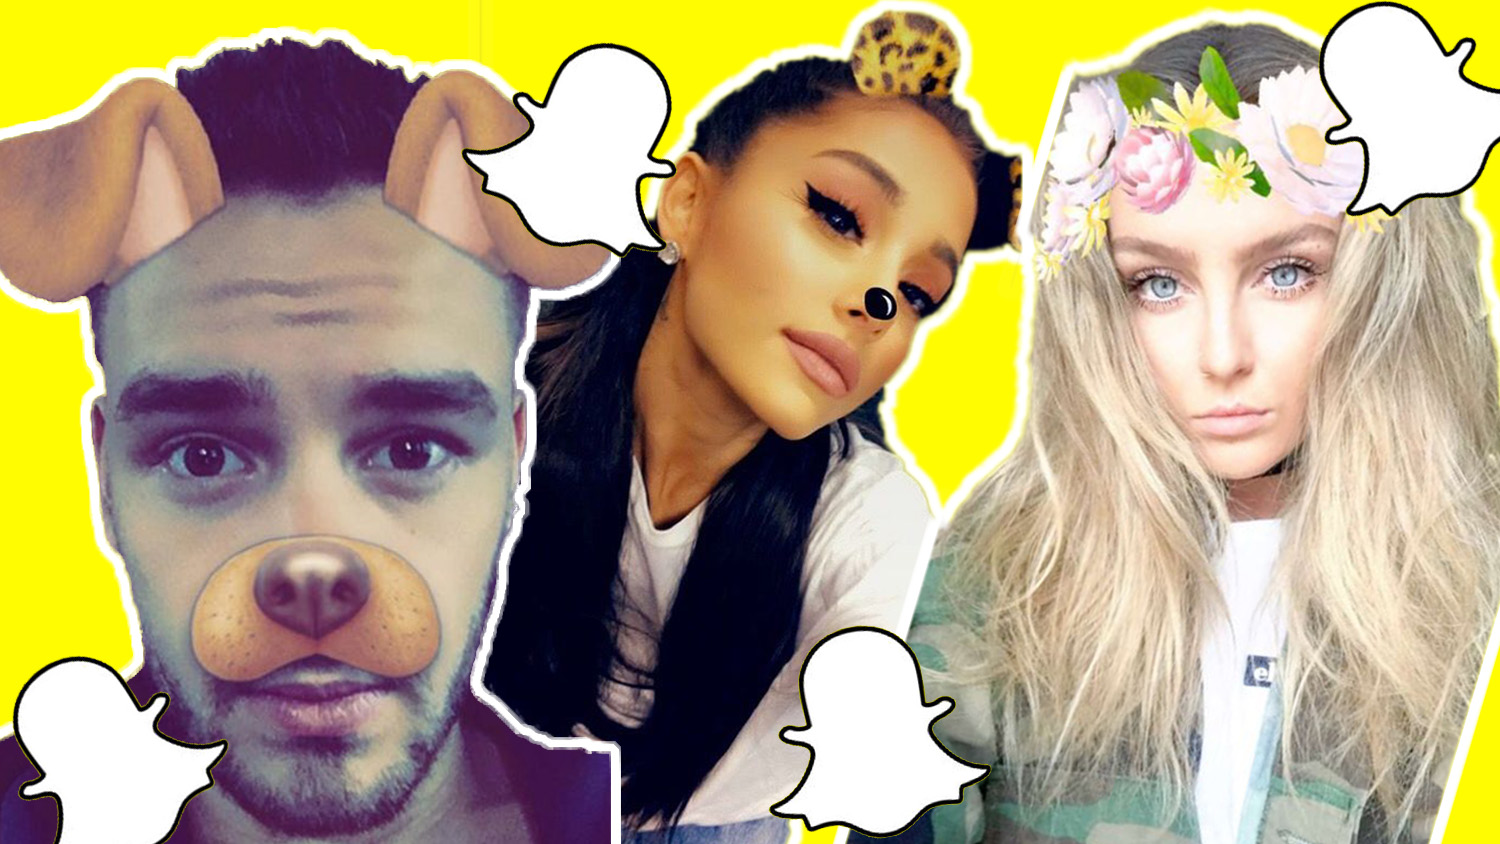 50+ Best Celebrity Snapchats 2018 - Top Celeb Snapchats to Follow Now